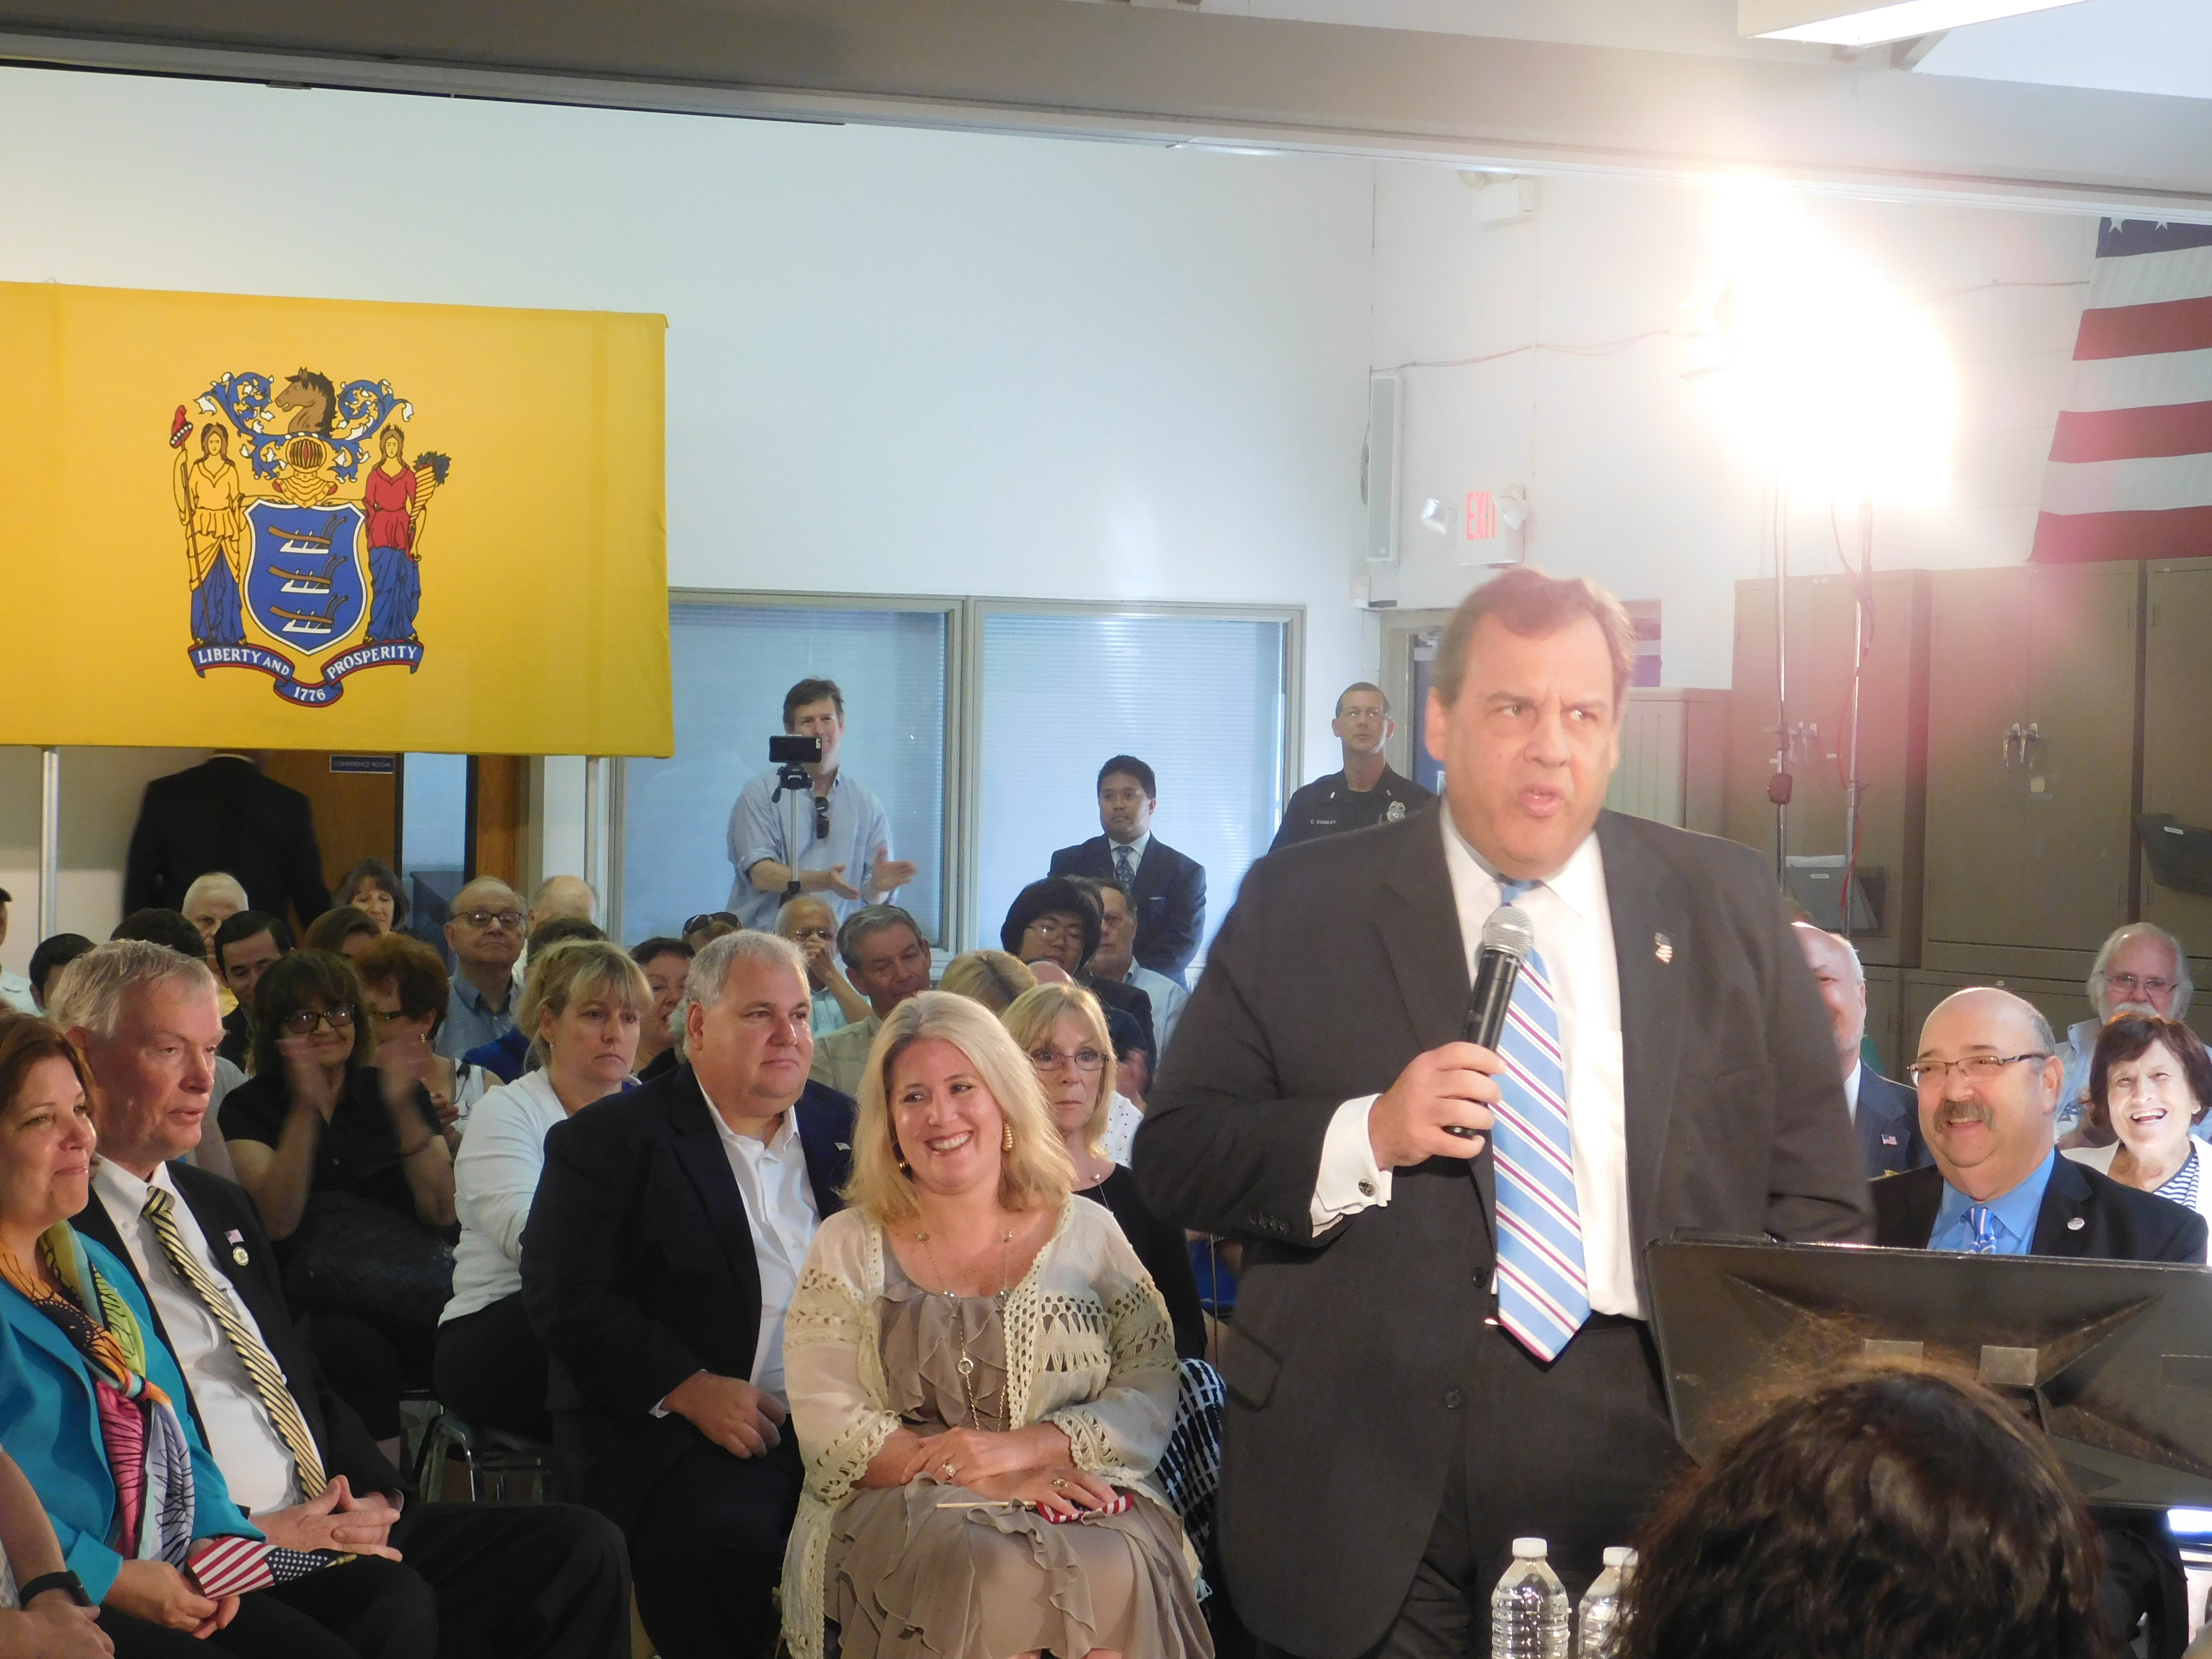 Governor Christie discusses school funding in Fair Lawn.